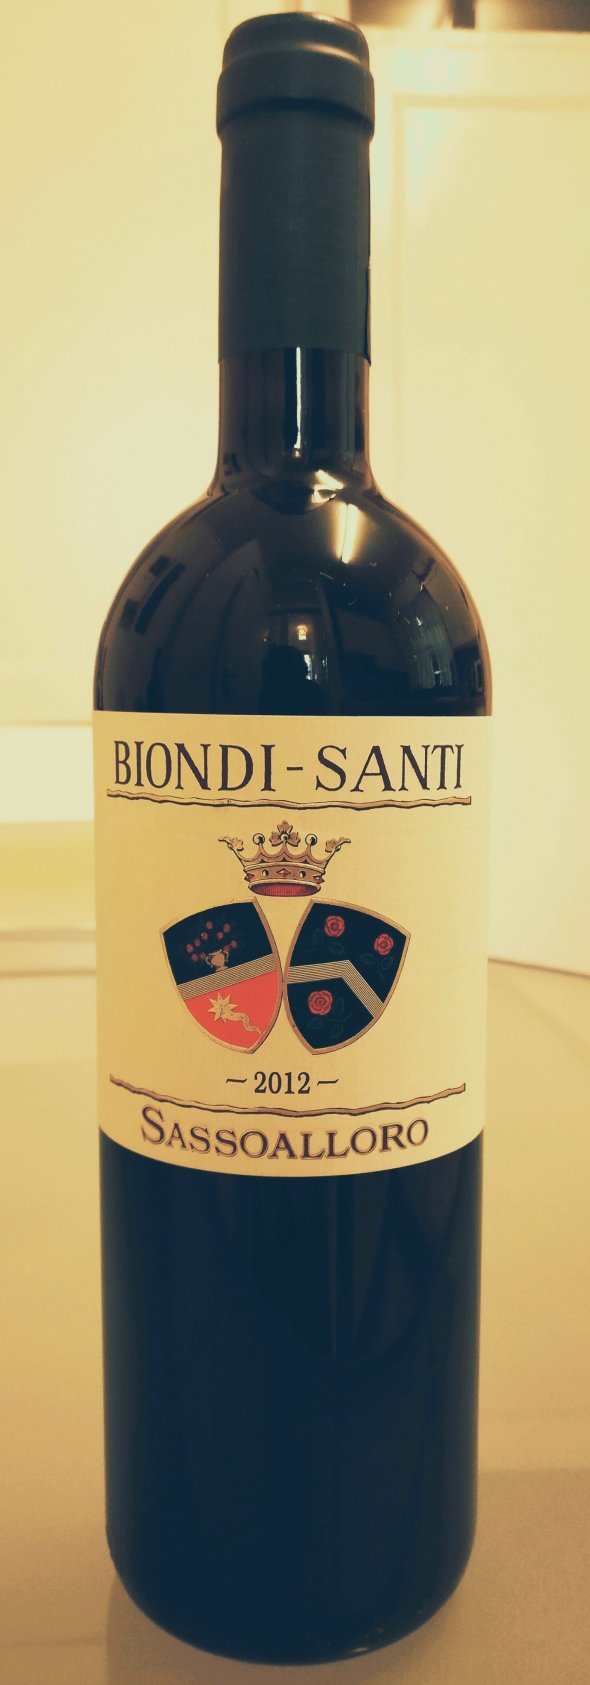 Biondi Santi, Sassoalloro, Tuscany, Italy, IGT